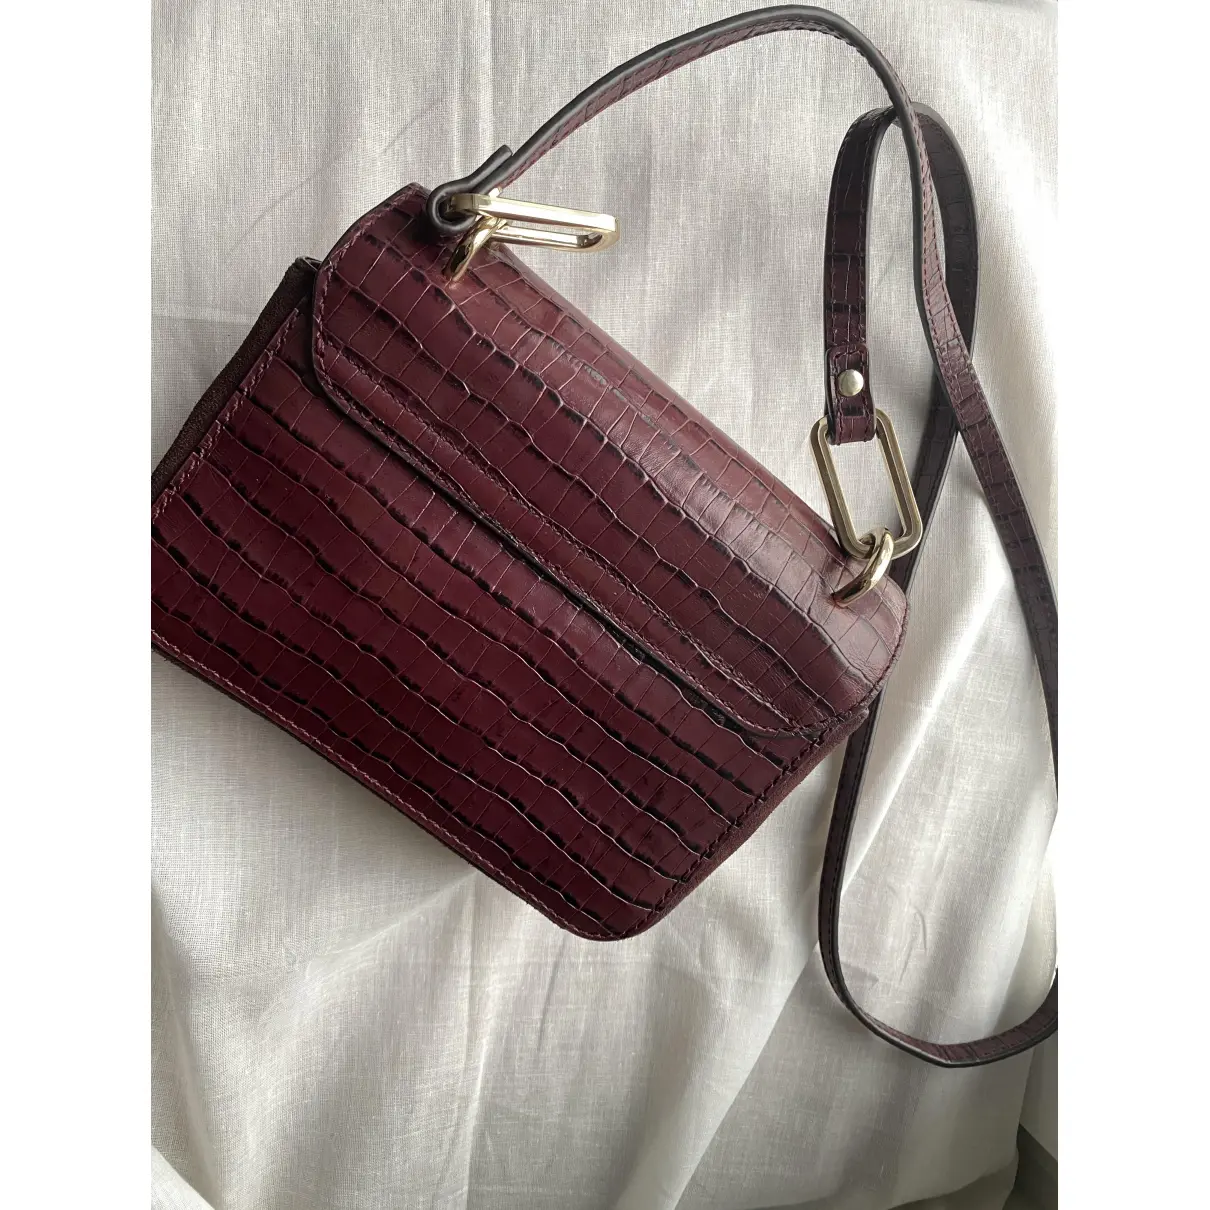 Buy Claudie Pierlot Fall Winter 2019 leather handbag online